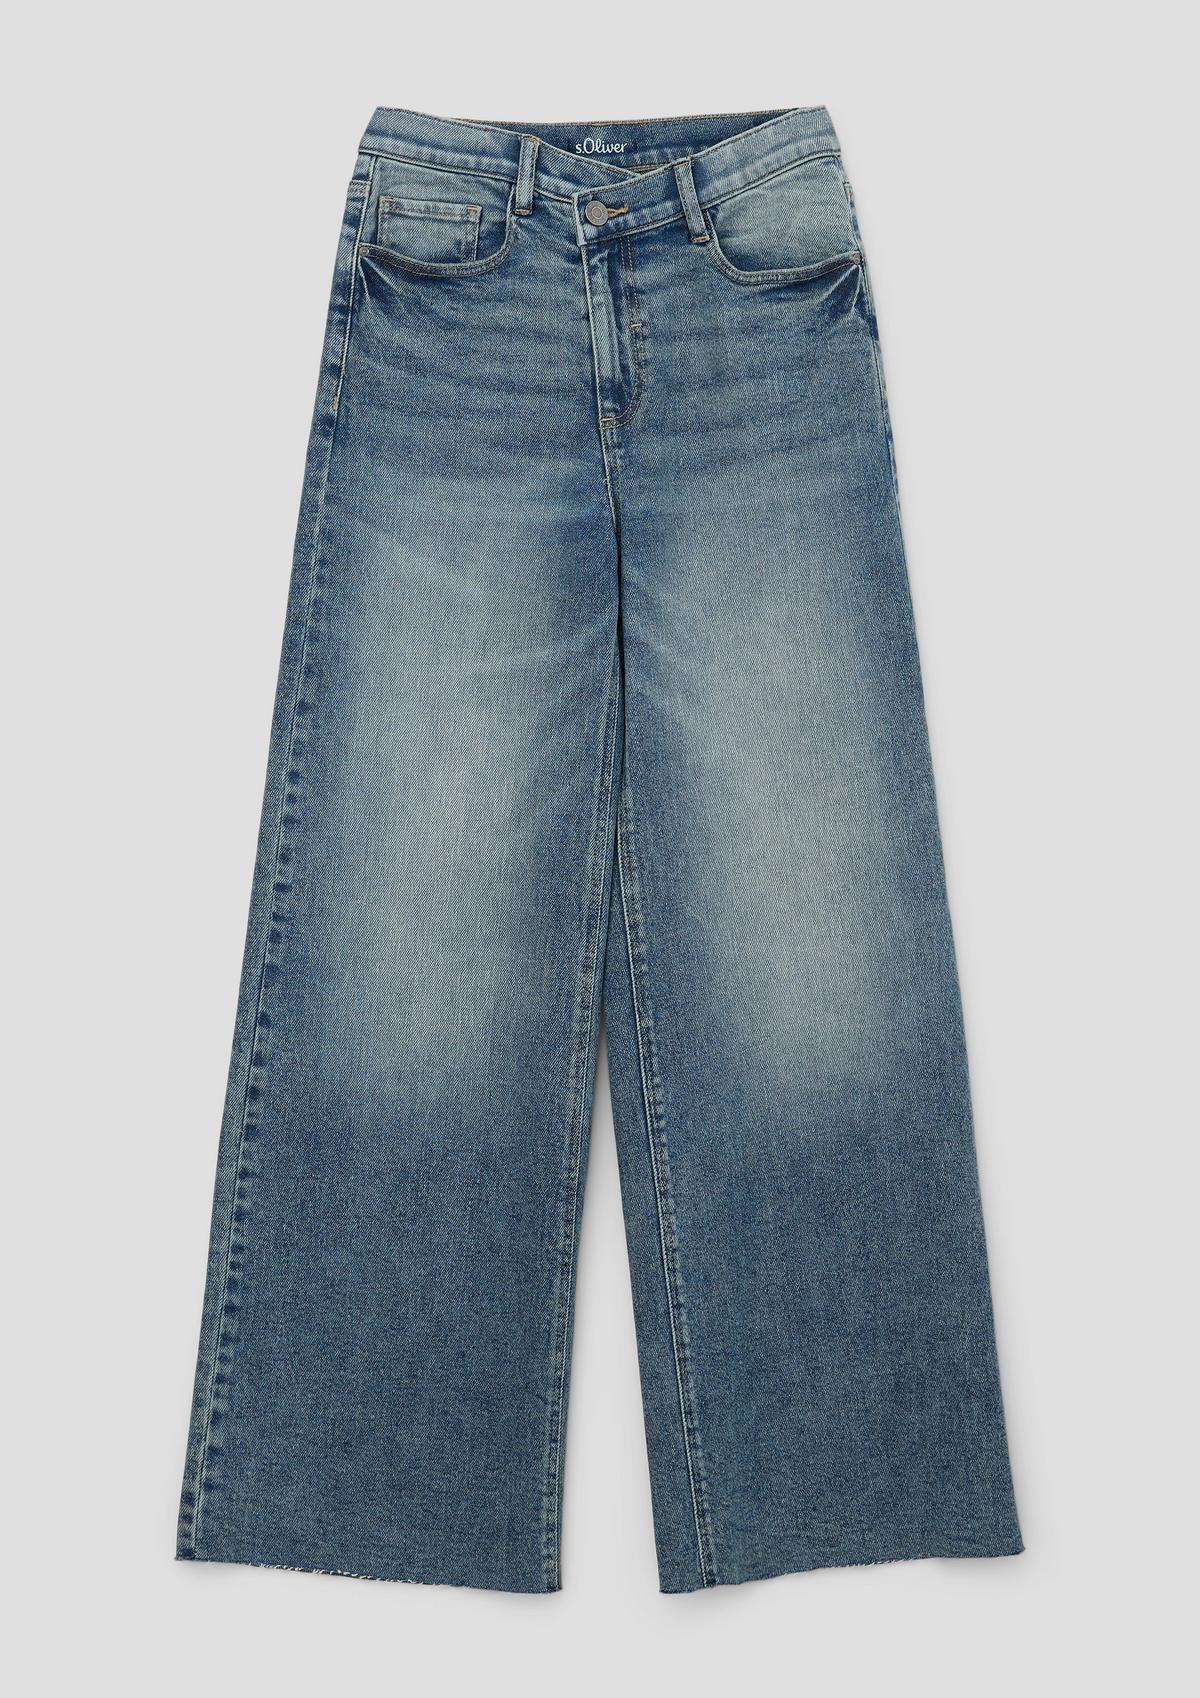 Jeans / High Regular asymmetrischem Super / - Rise Bund Leg blau Wide Fit / 